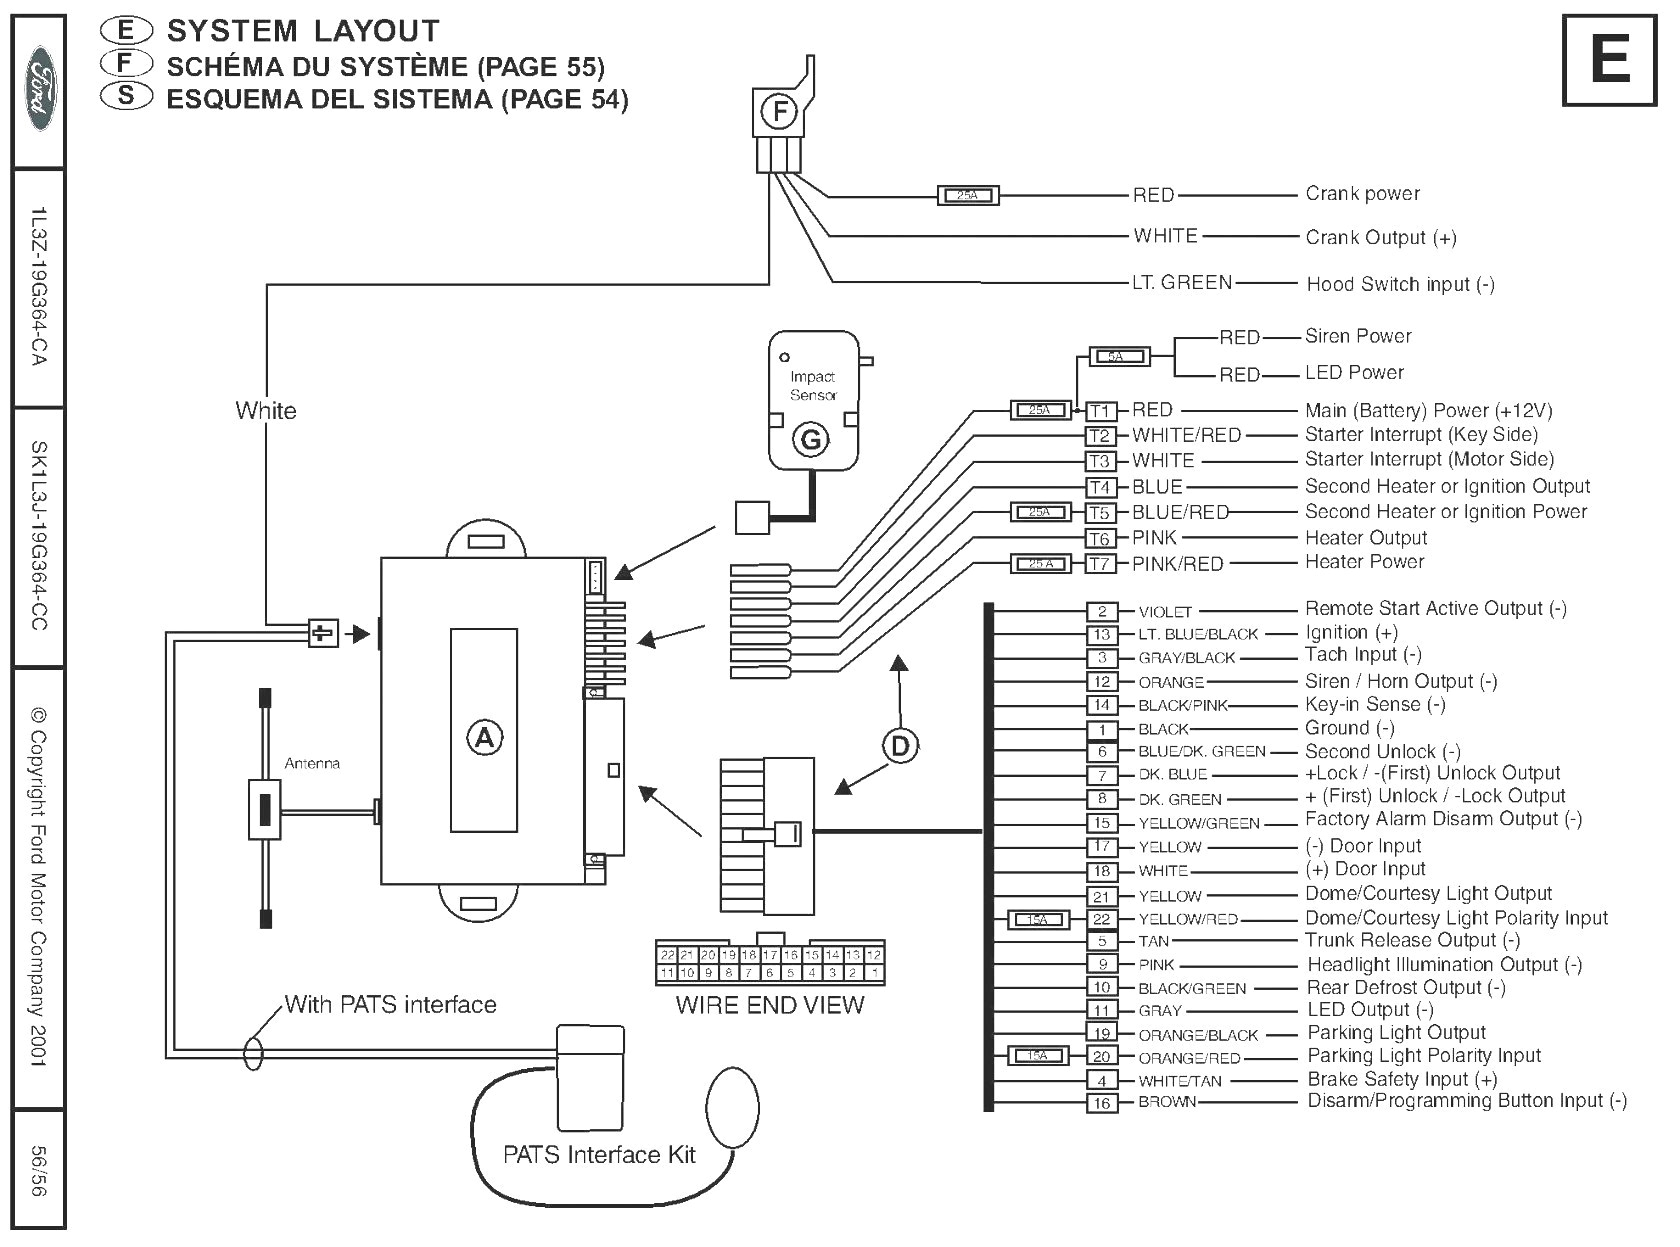 karr 4040a wiring diagram wiring library karr alarm system wiring diagram karr 4040a wiring diagram